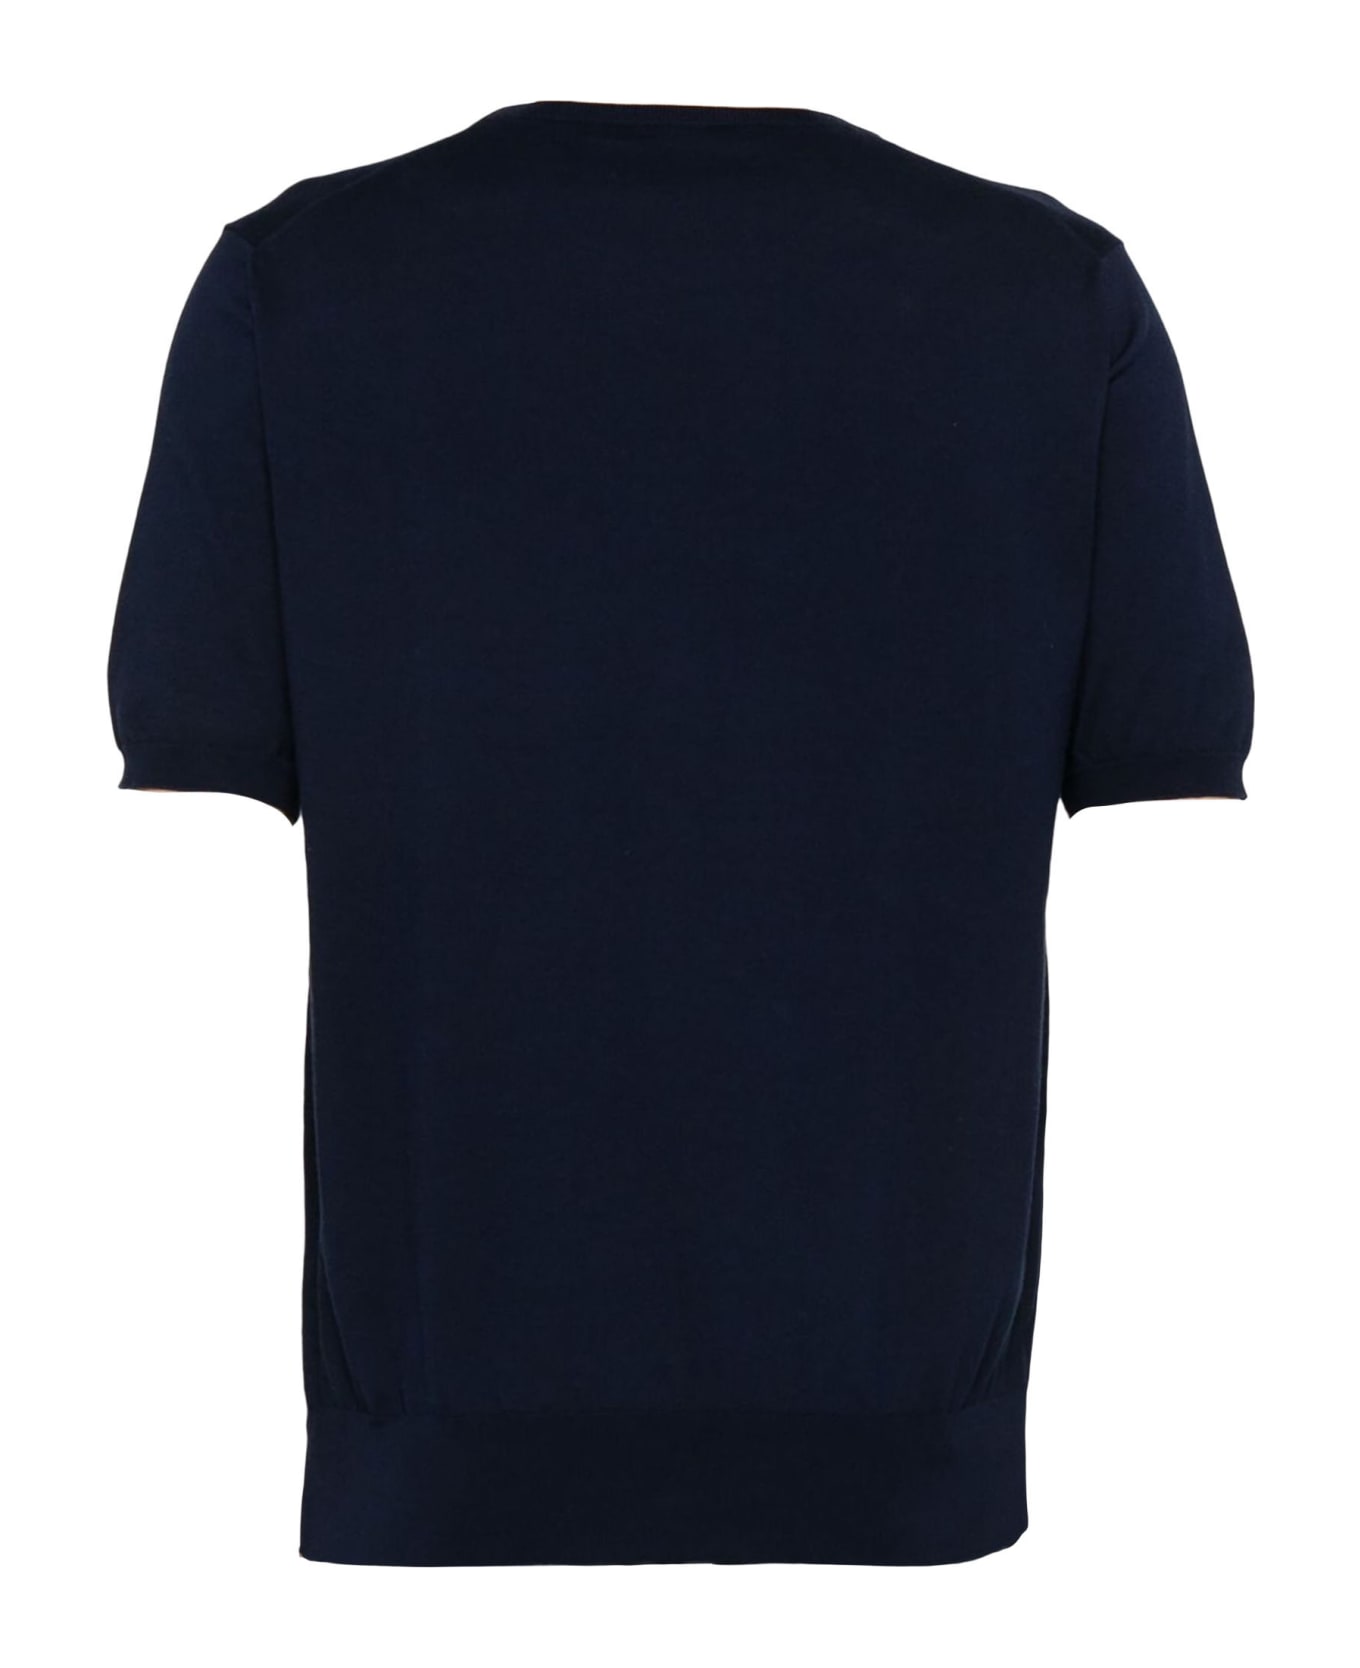 Cruciani Navy Blue Cotton T-shirt - Blue